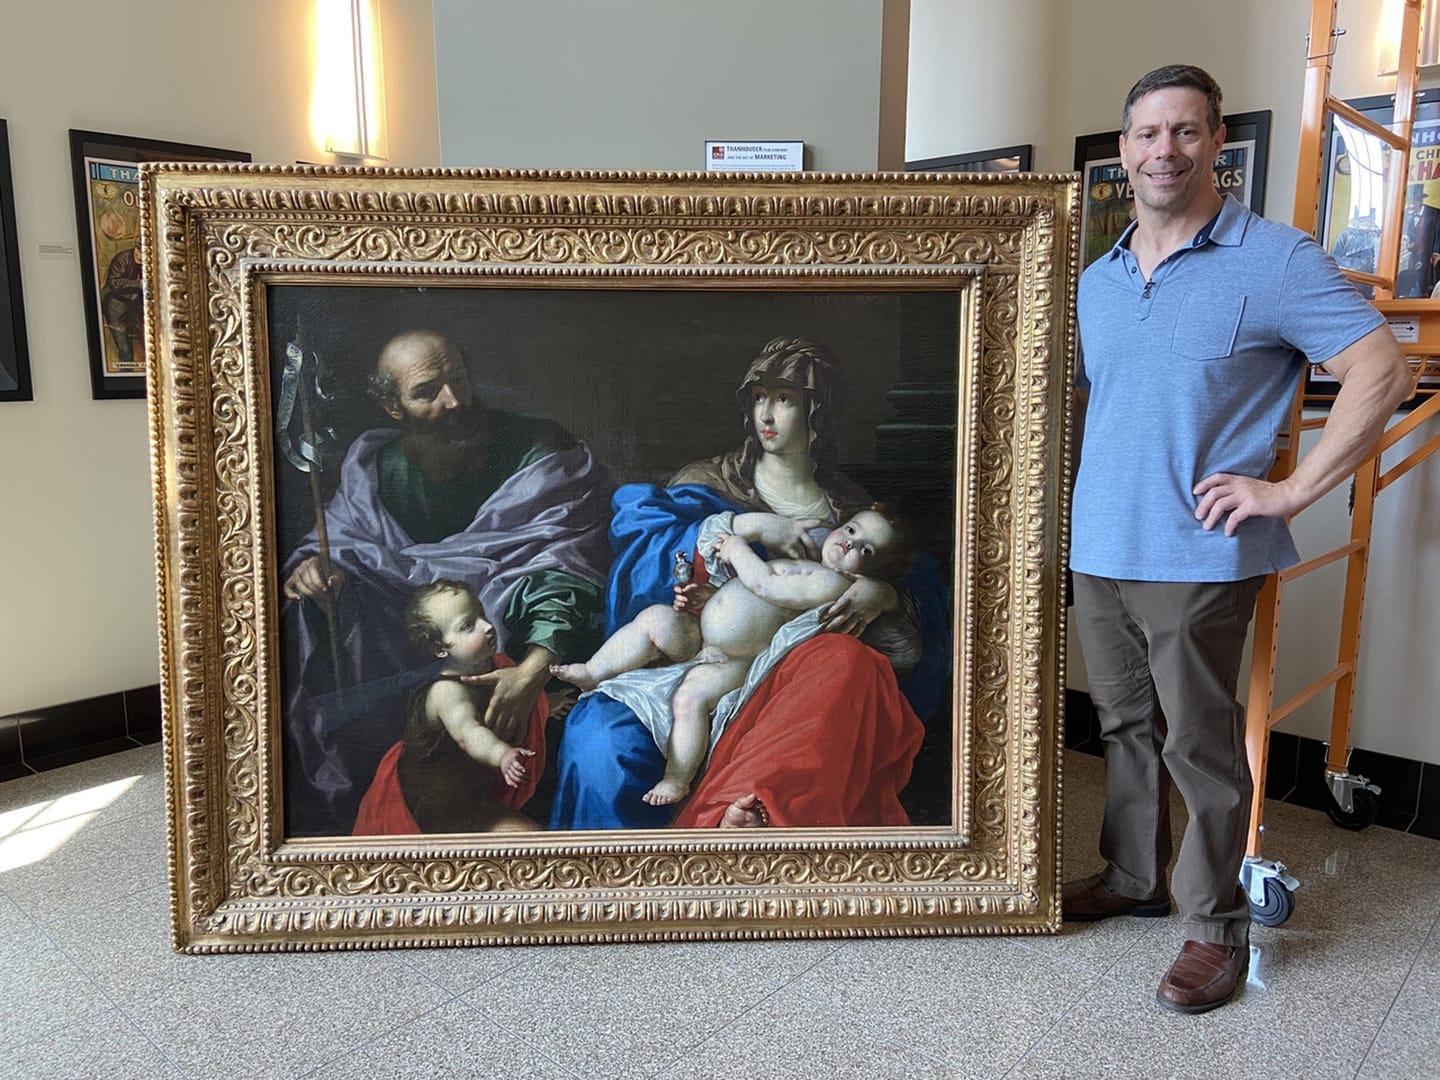 Identification of painting as 17th-century masterwork brings joy to parish